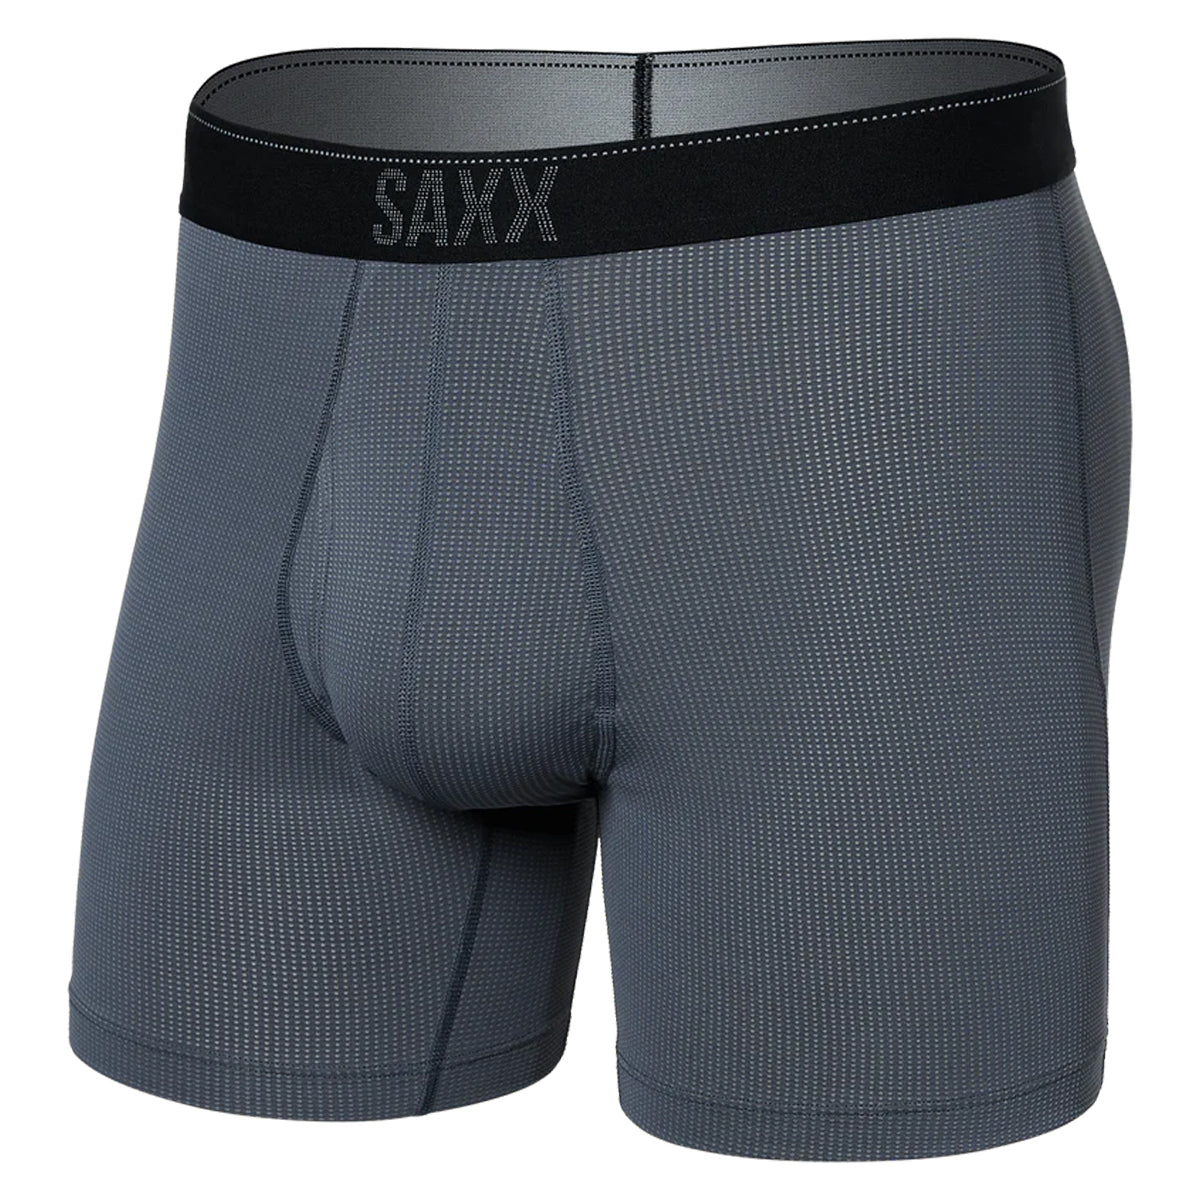 SAXX Quest Short Boxer Brief